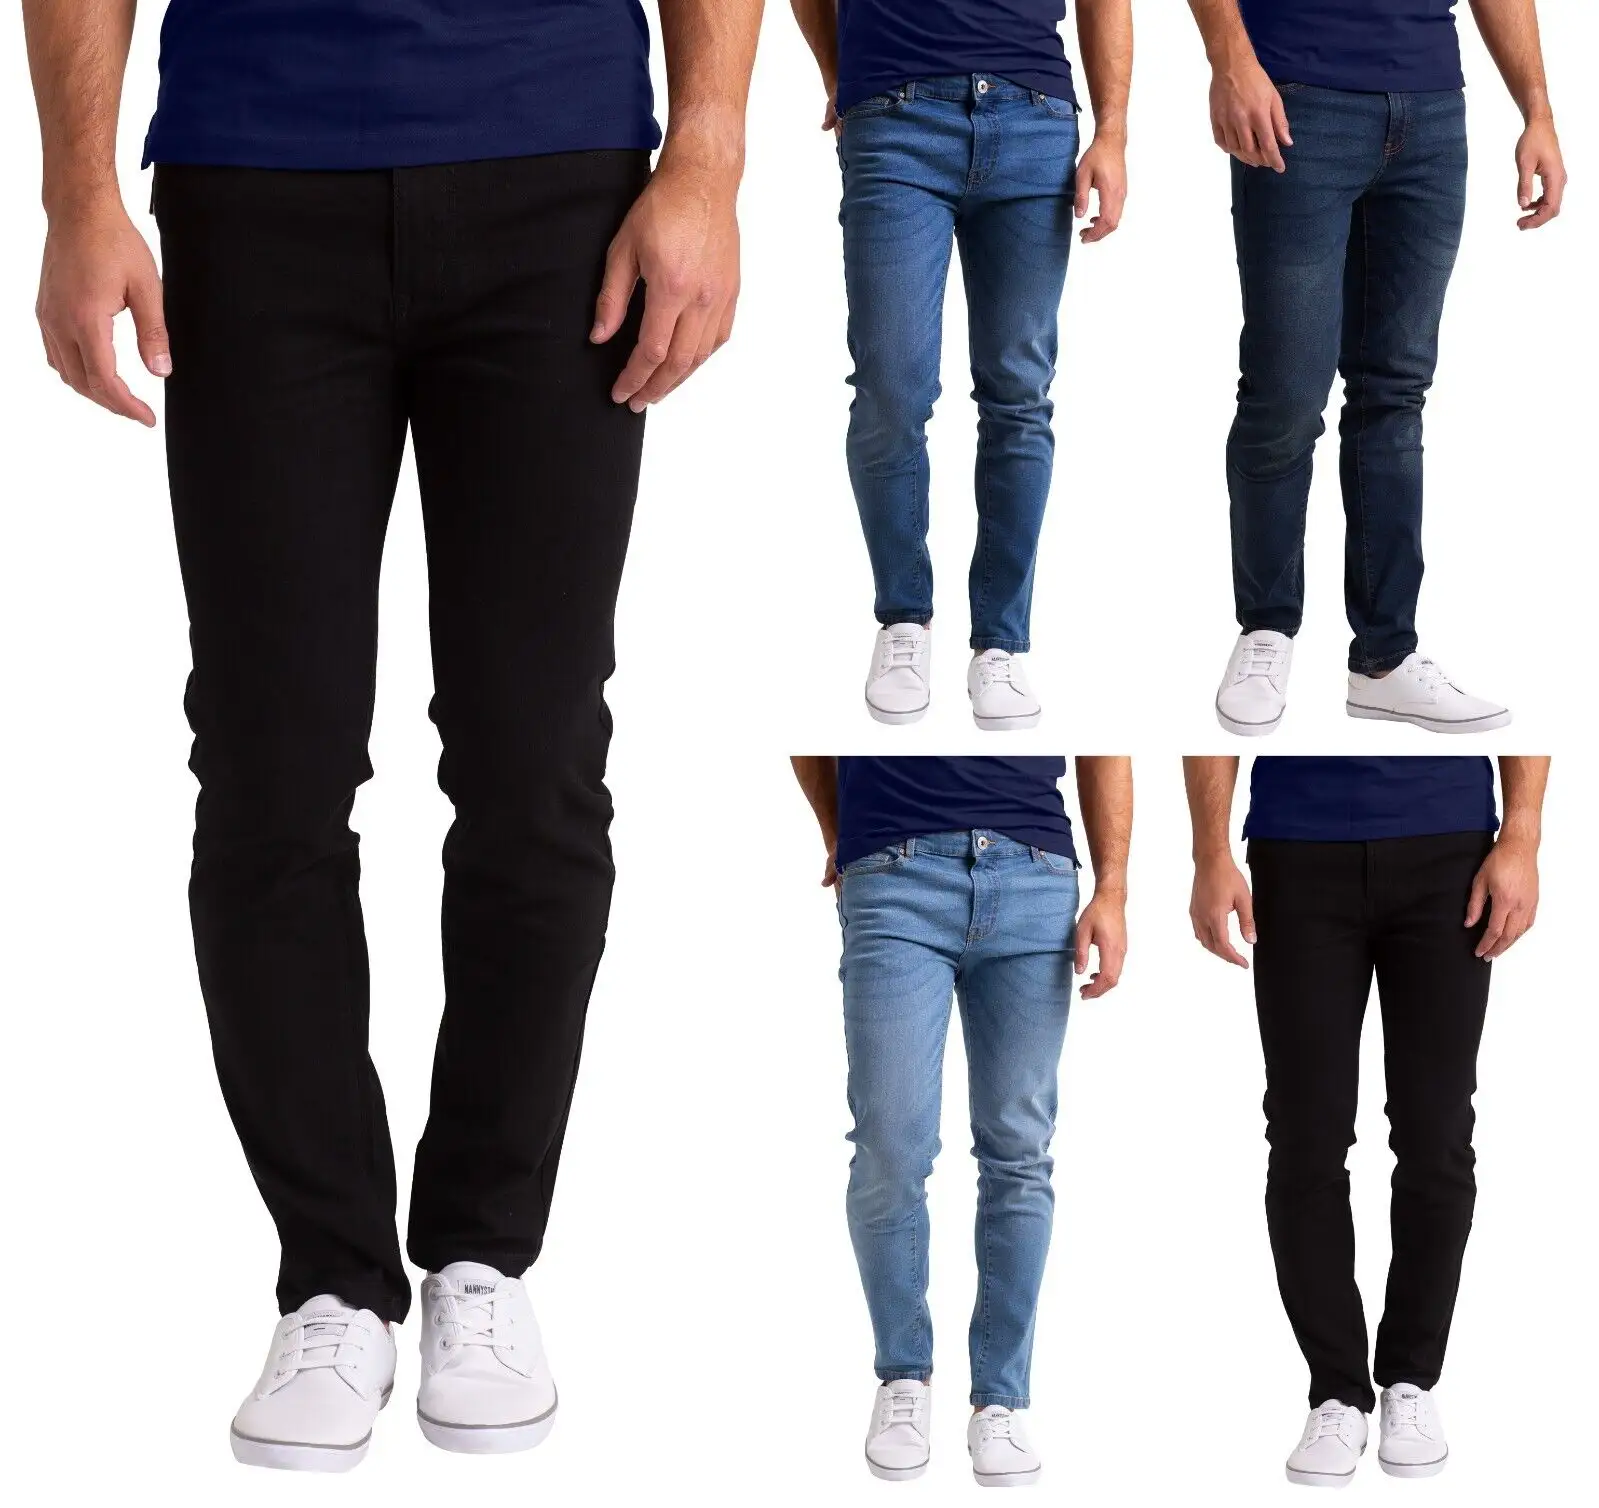 Calça jeans masculina slim fit, tamanhos grandes